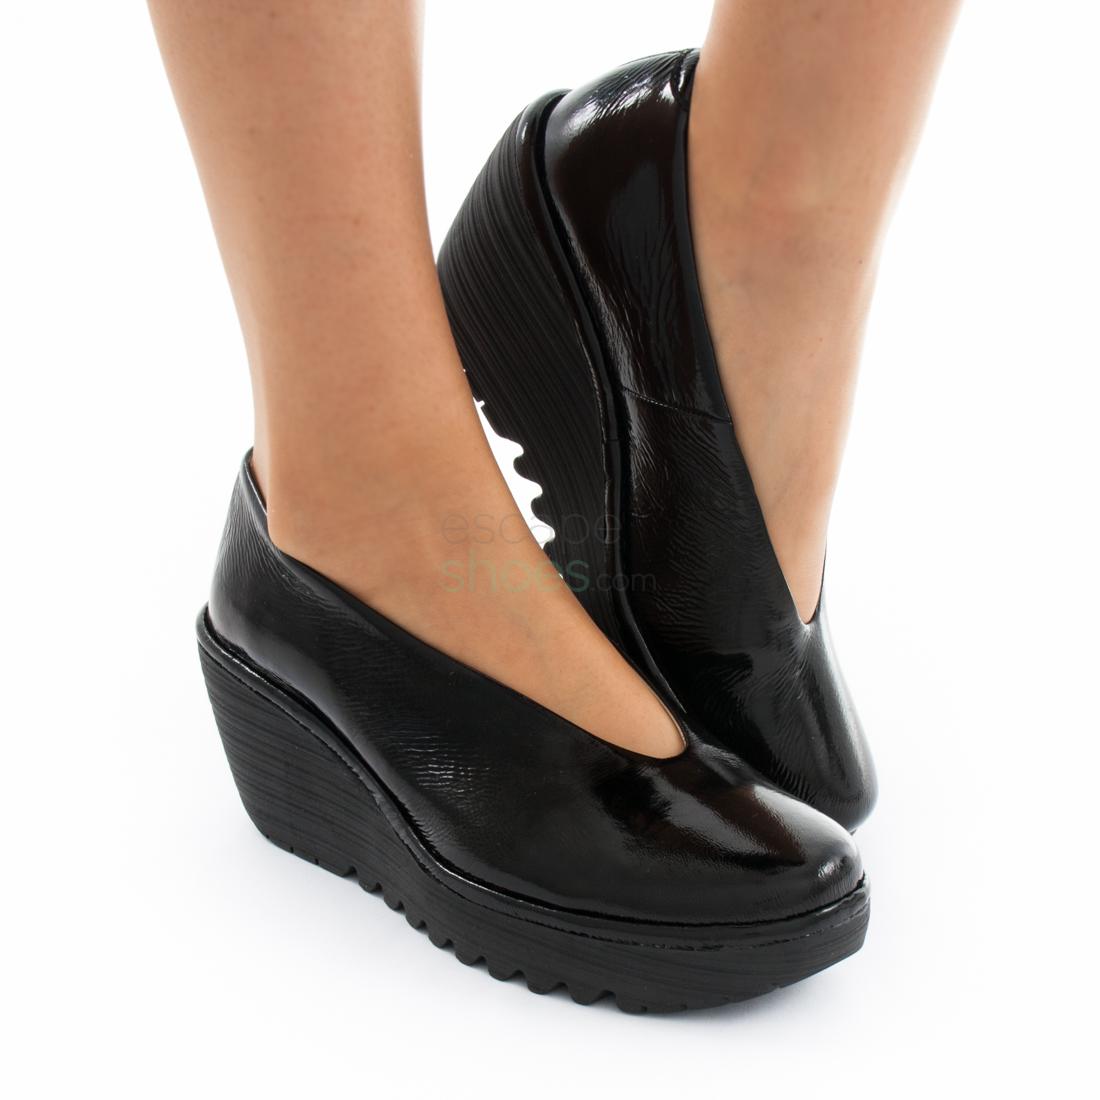 Fly London Yaz Womens Leather Wedge Shoes UK Size 3-8 